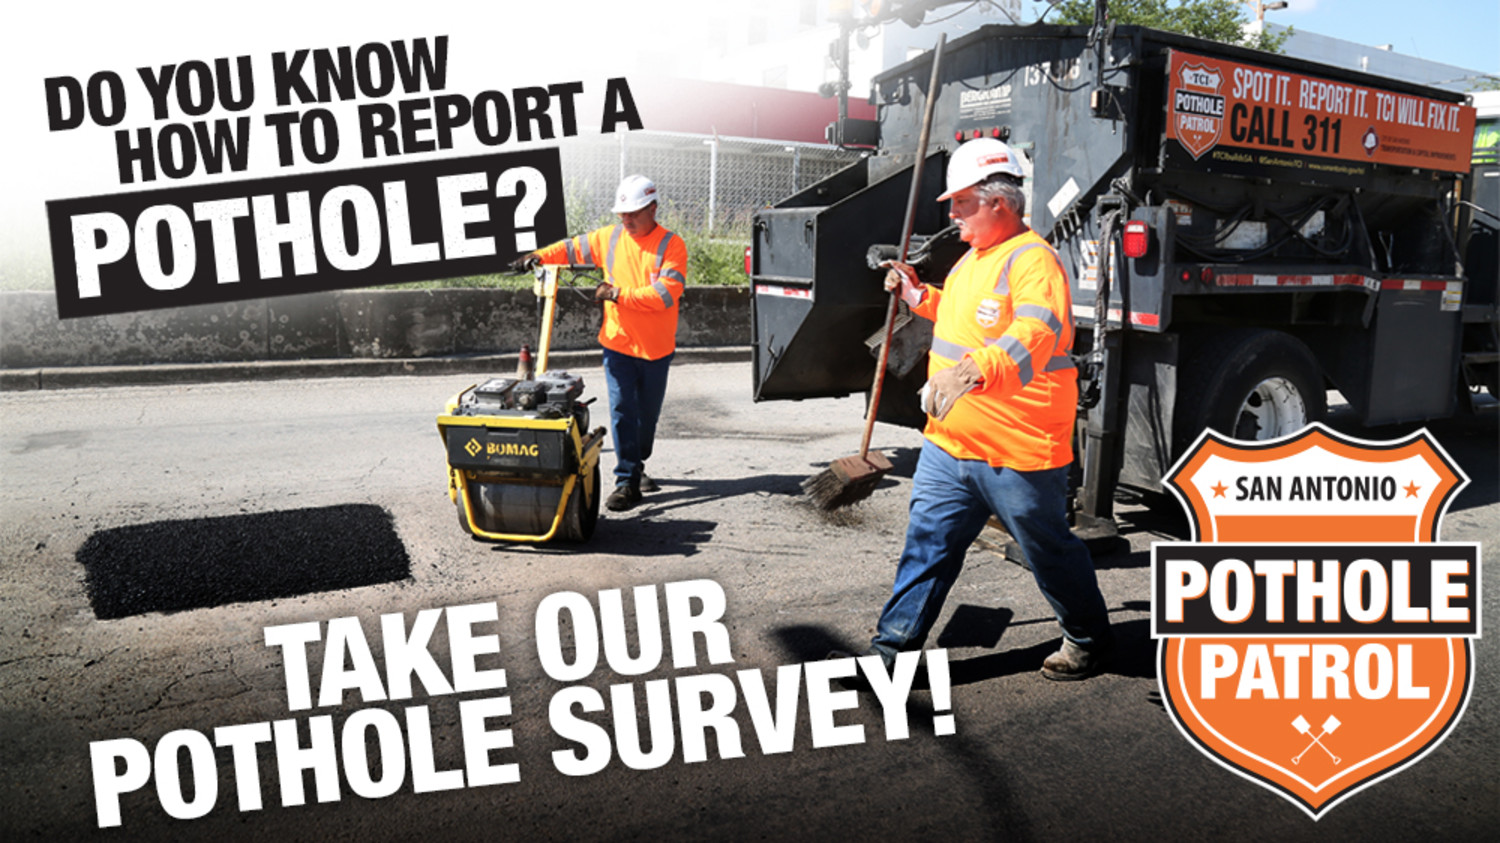 Featured image for FY 2020 Pothole Survey